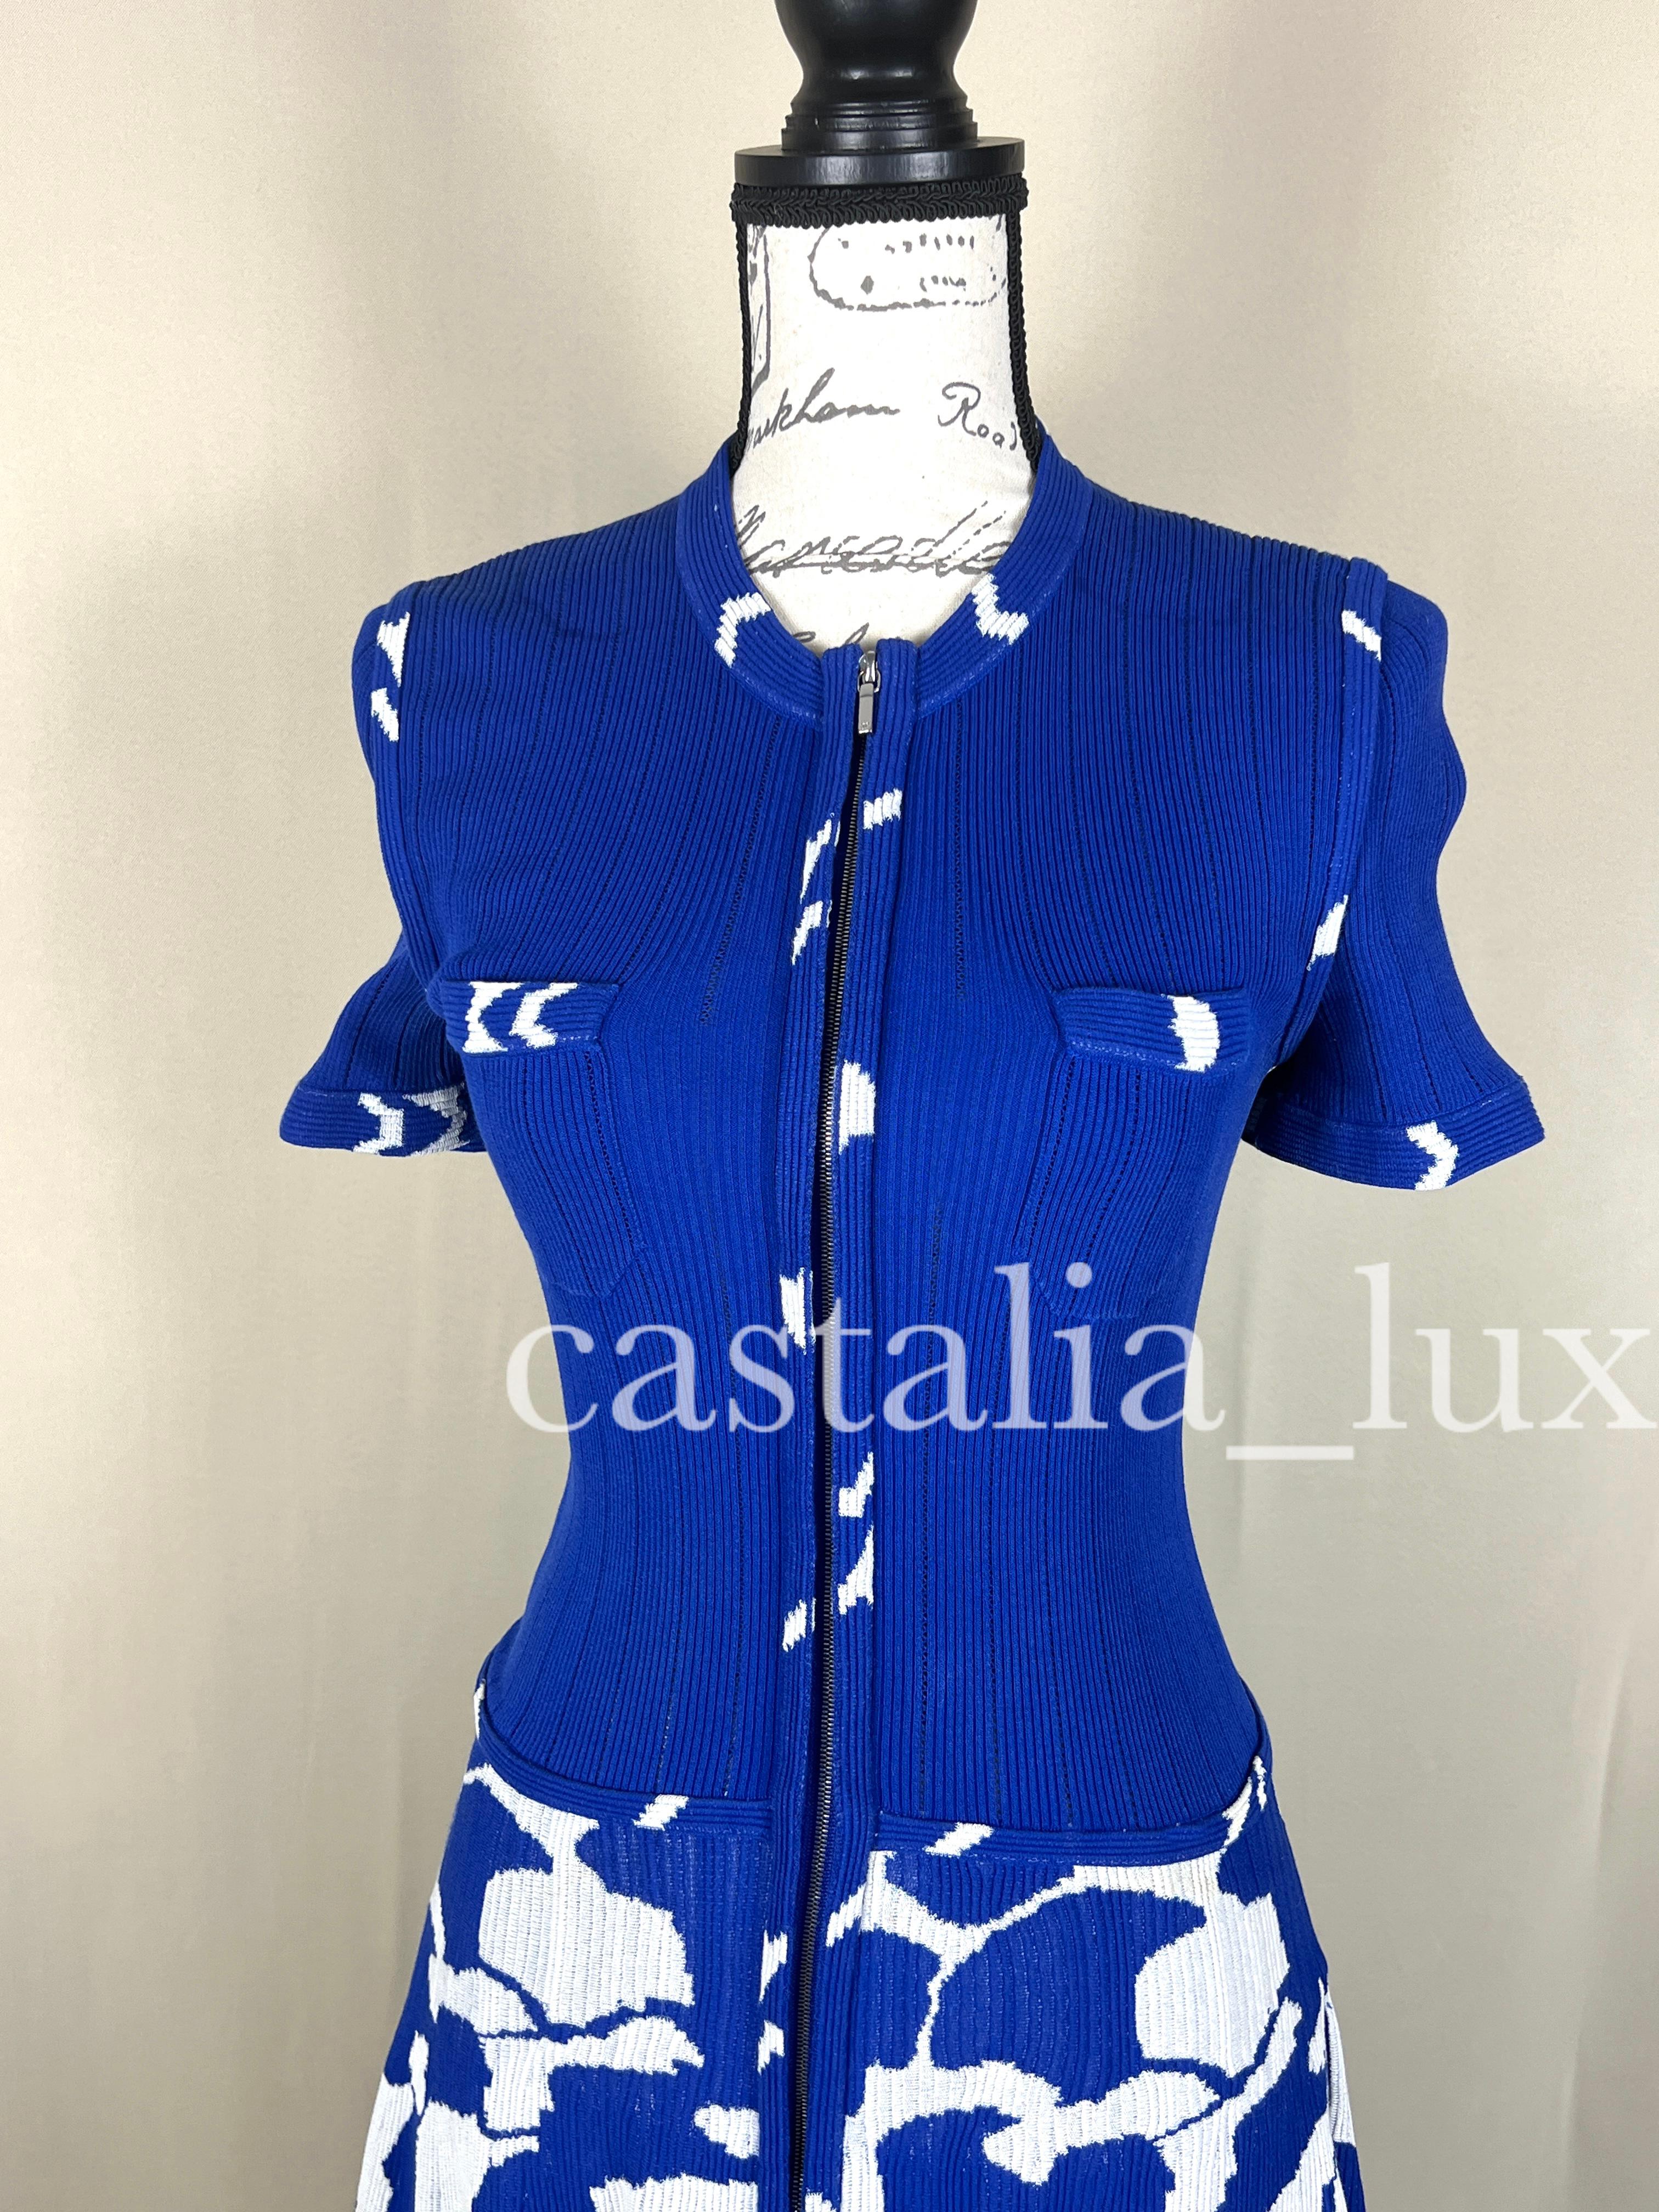 Chanel Iconic Jessica Biel Style Maxi Dress For Sale 3